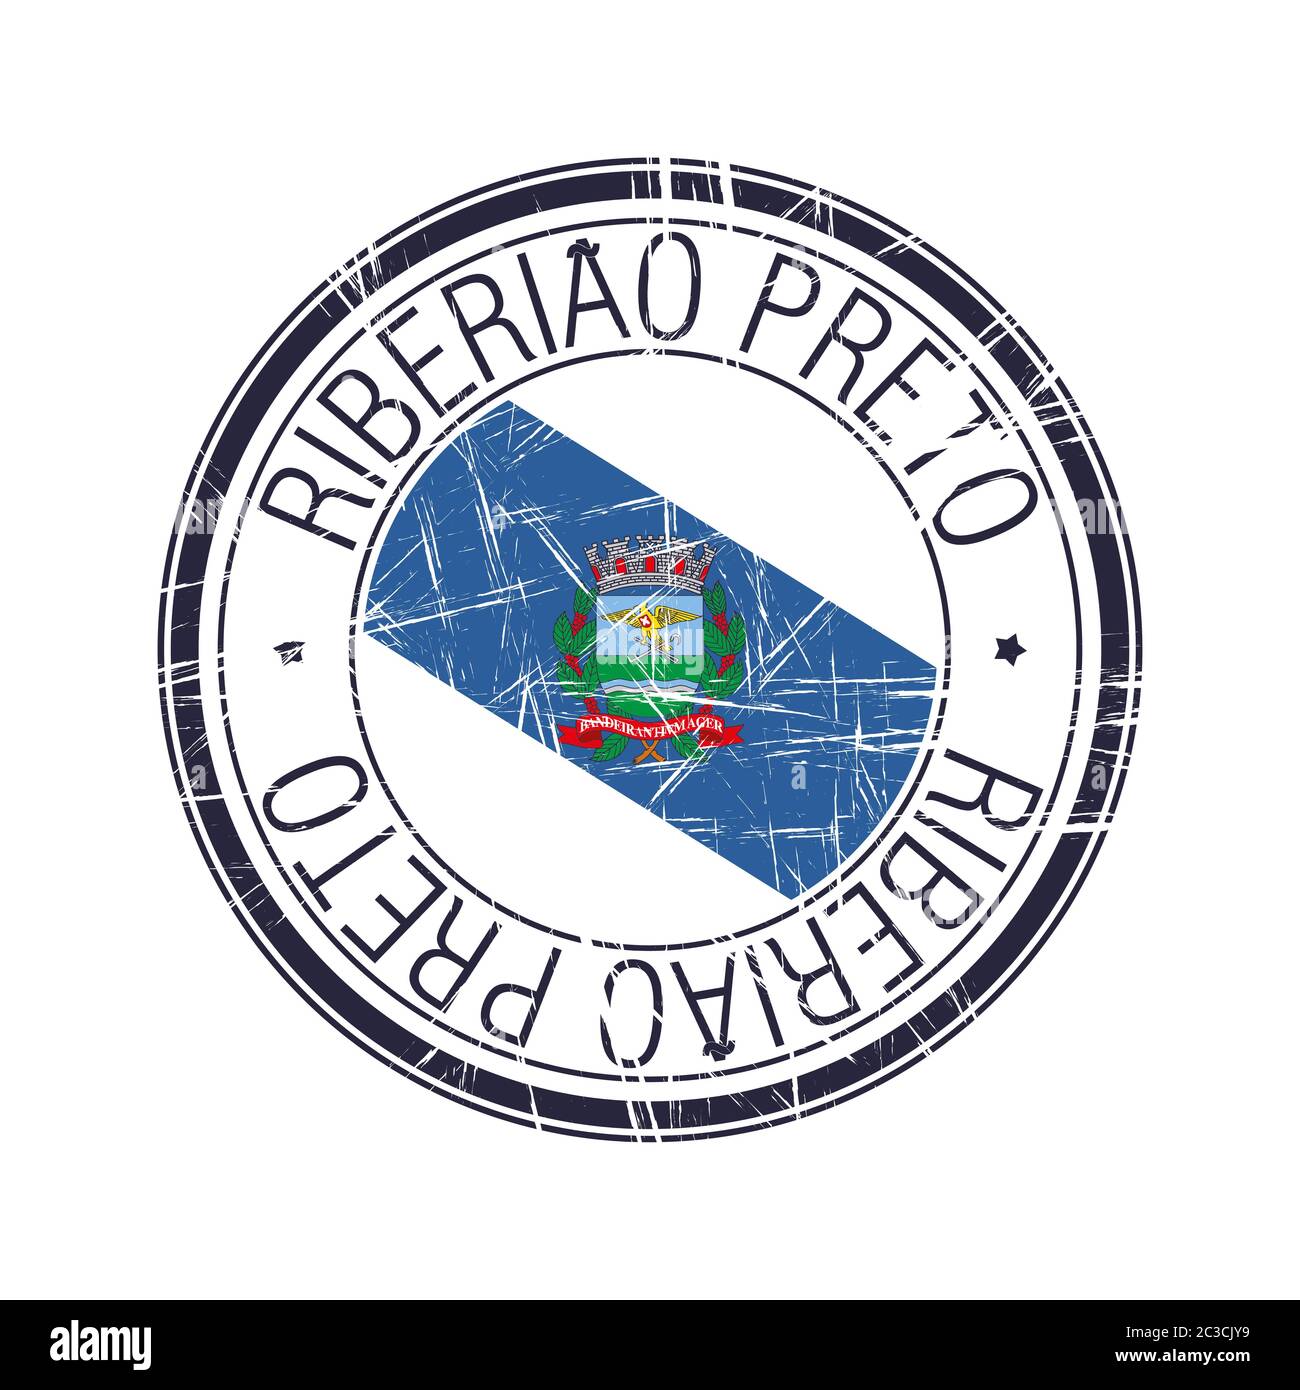 City of Ribeirao Preto, Brazil vector stamp Stock Photo